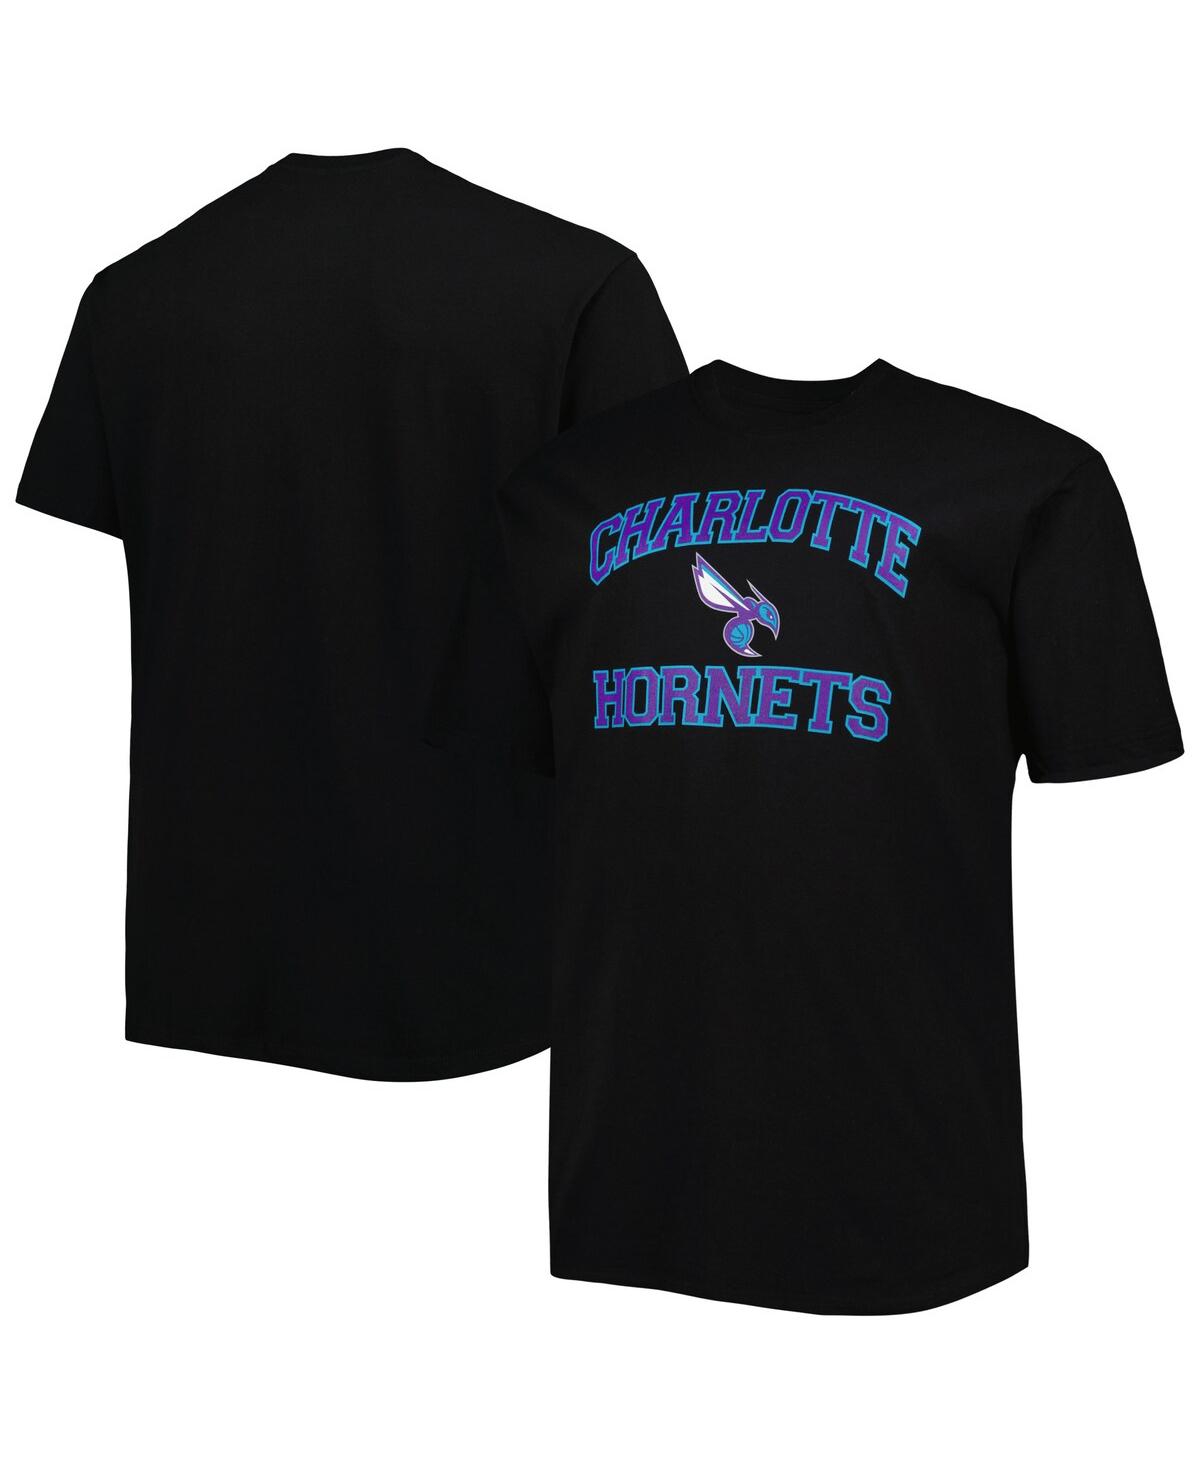 Men's Black Charlotte Hornets Big and Tall Heart and Soul T-shirt - Black